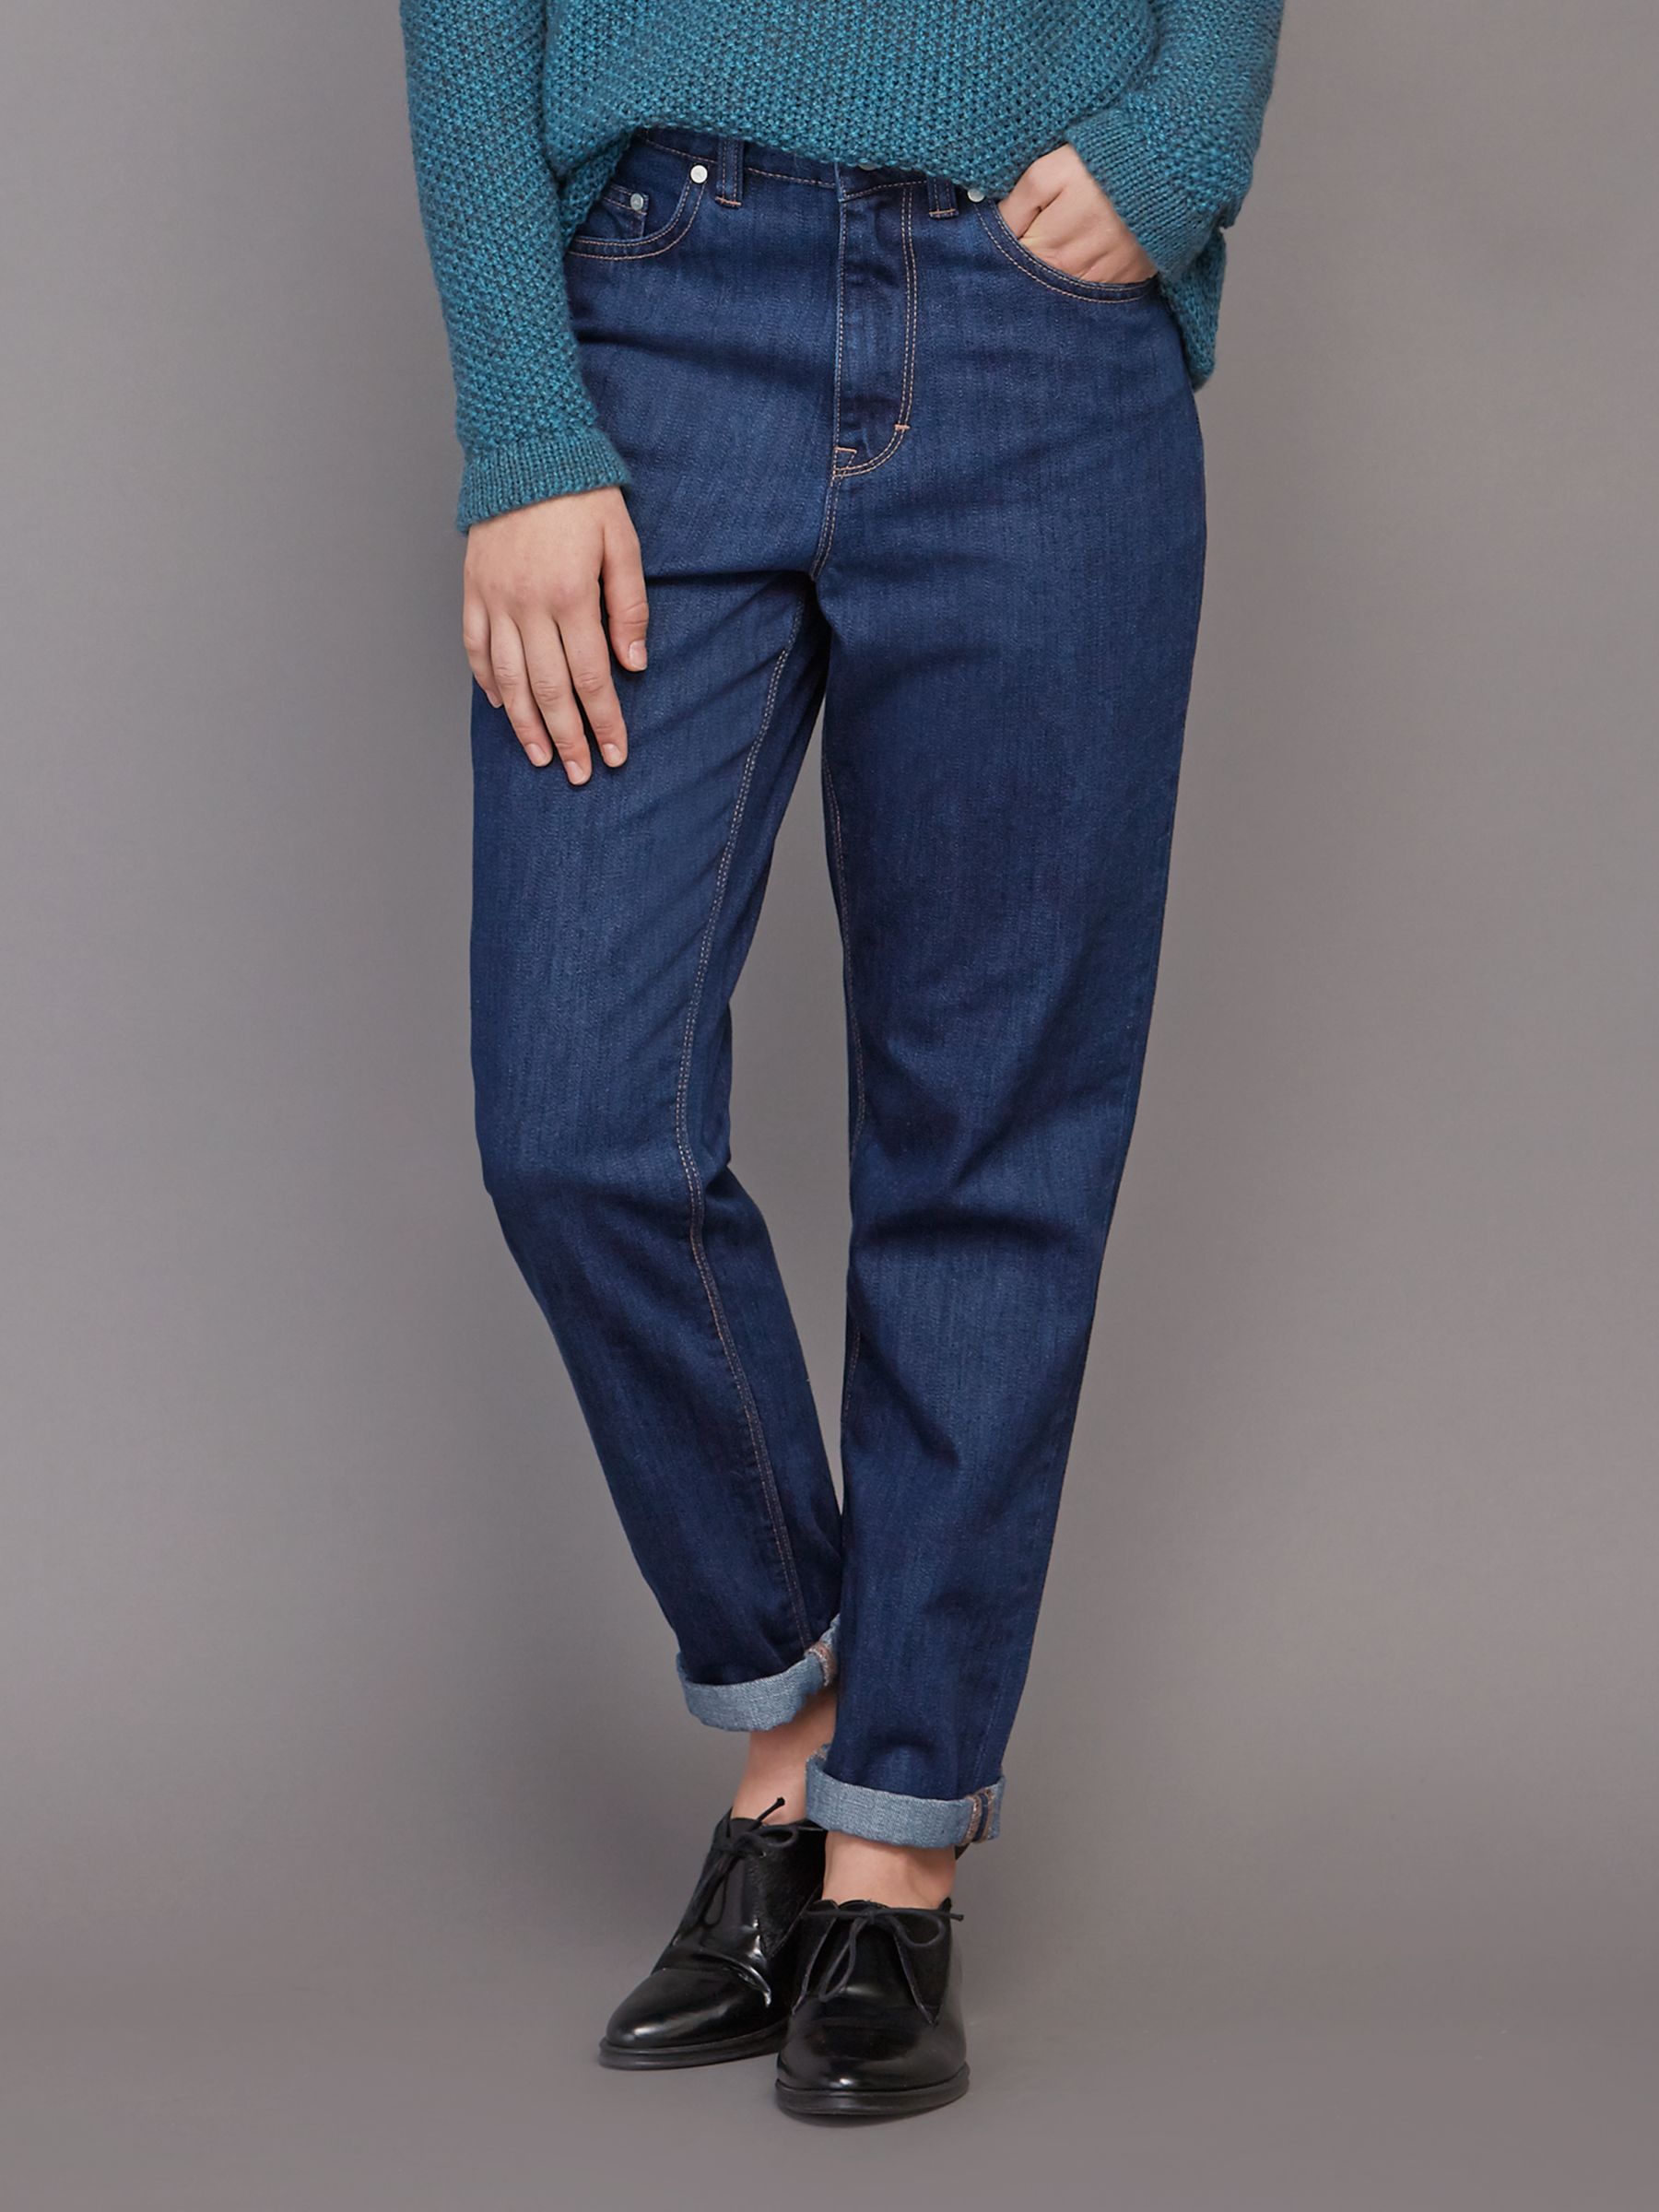 american vintage blue jeans